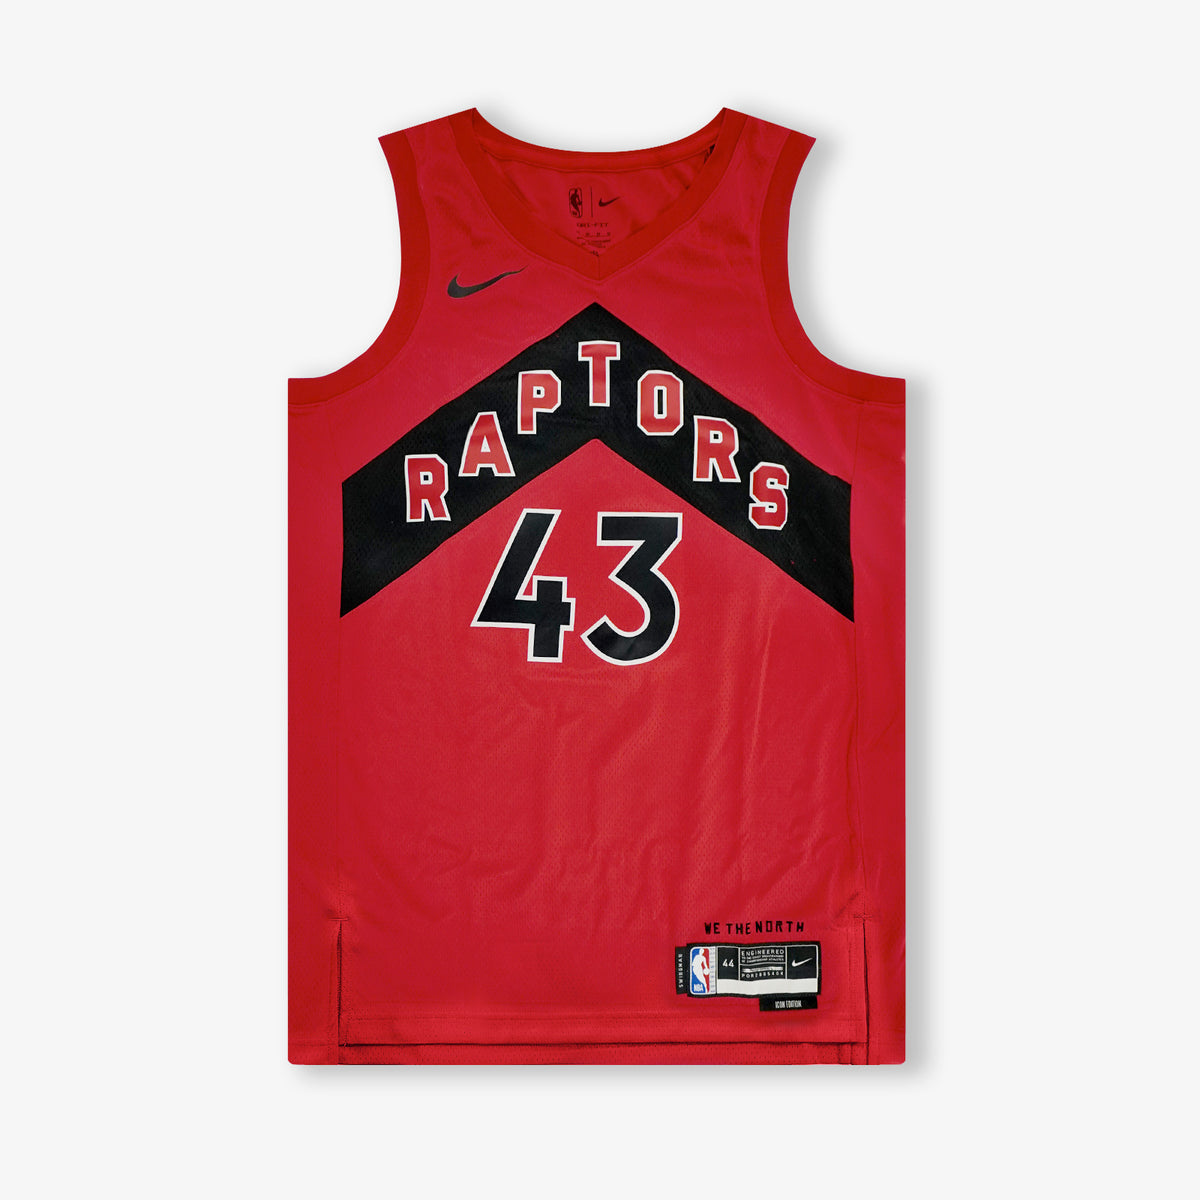 Kawhi Leonard Toronto Raptors Jerseys & Official Nike 'NORTH' Jerseys